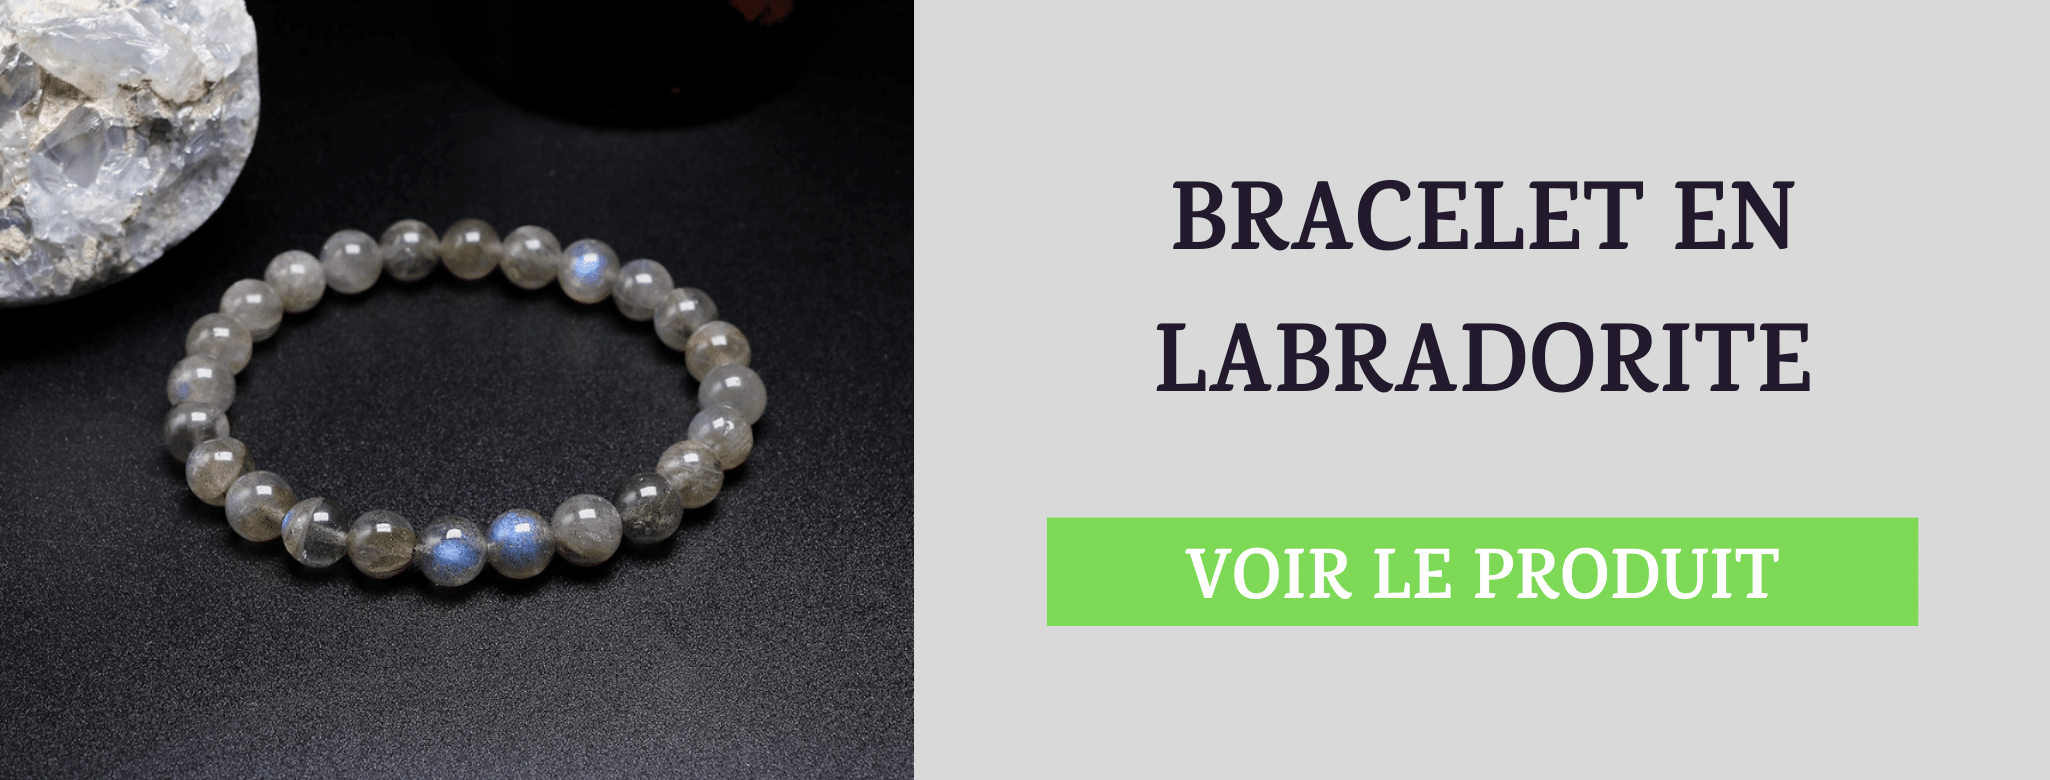 Bracelet Labradorite